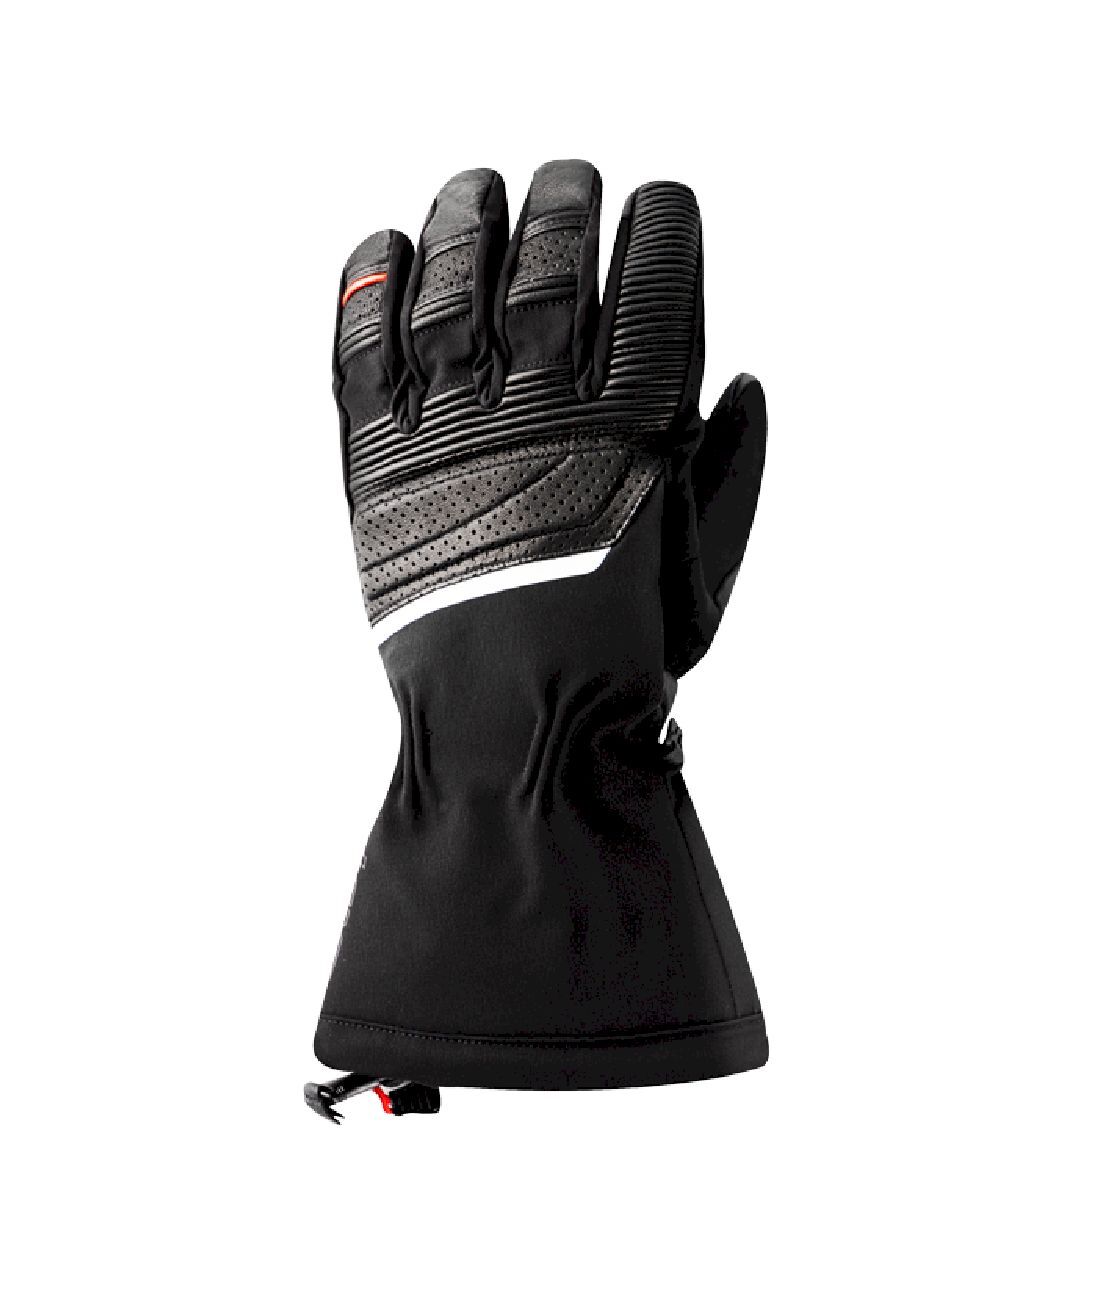 Lenz Heat Glove 6.0 Finger Cap - Skihandschuhe - Herren